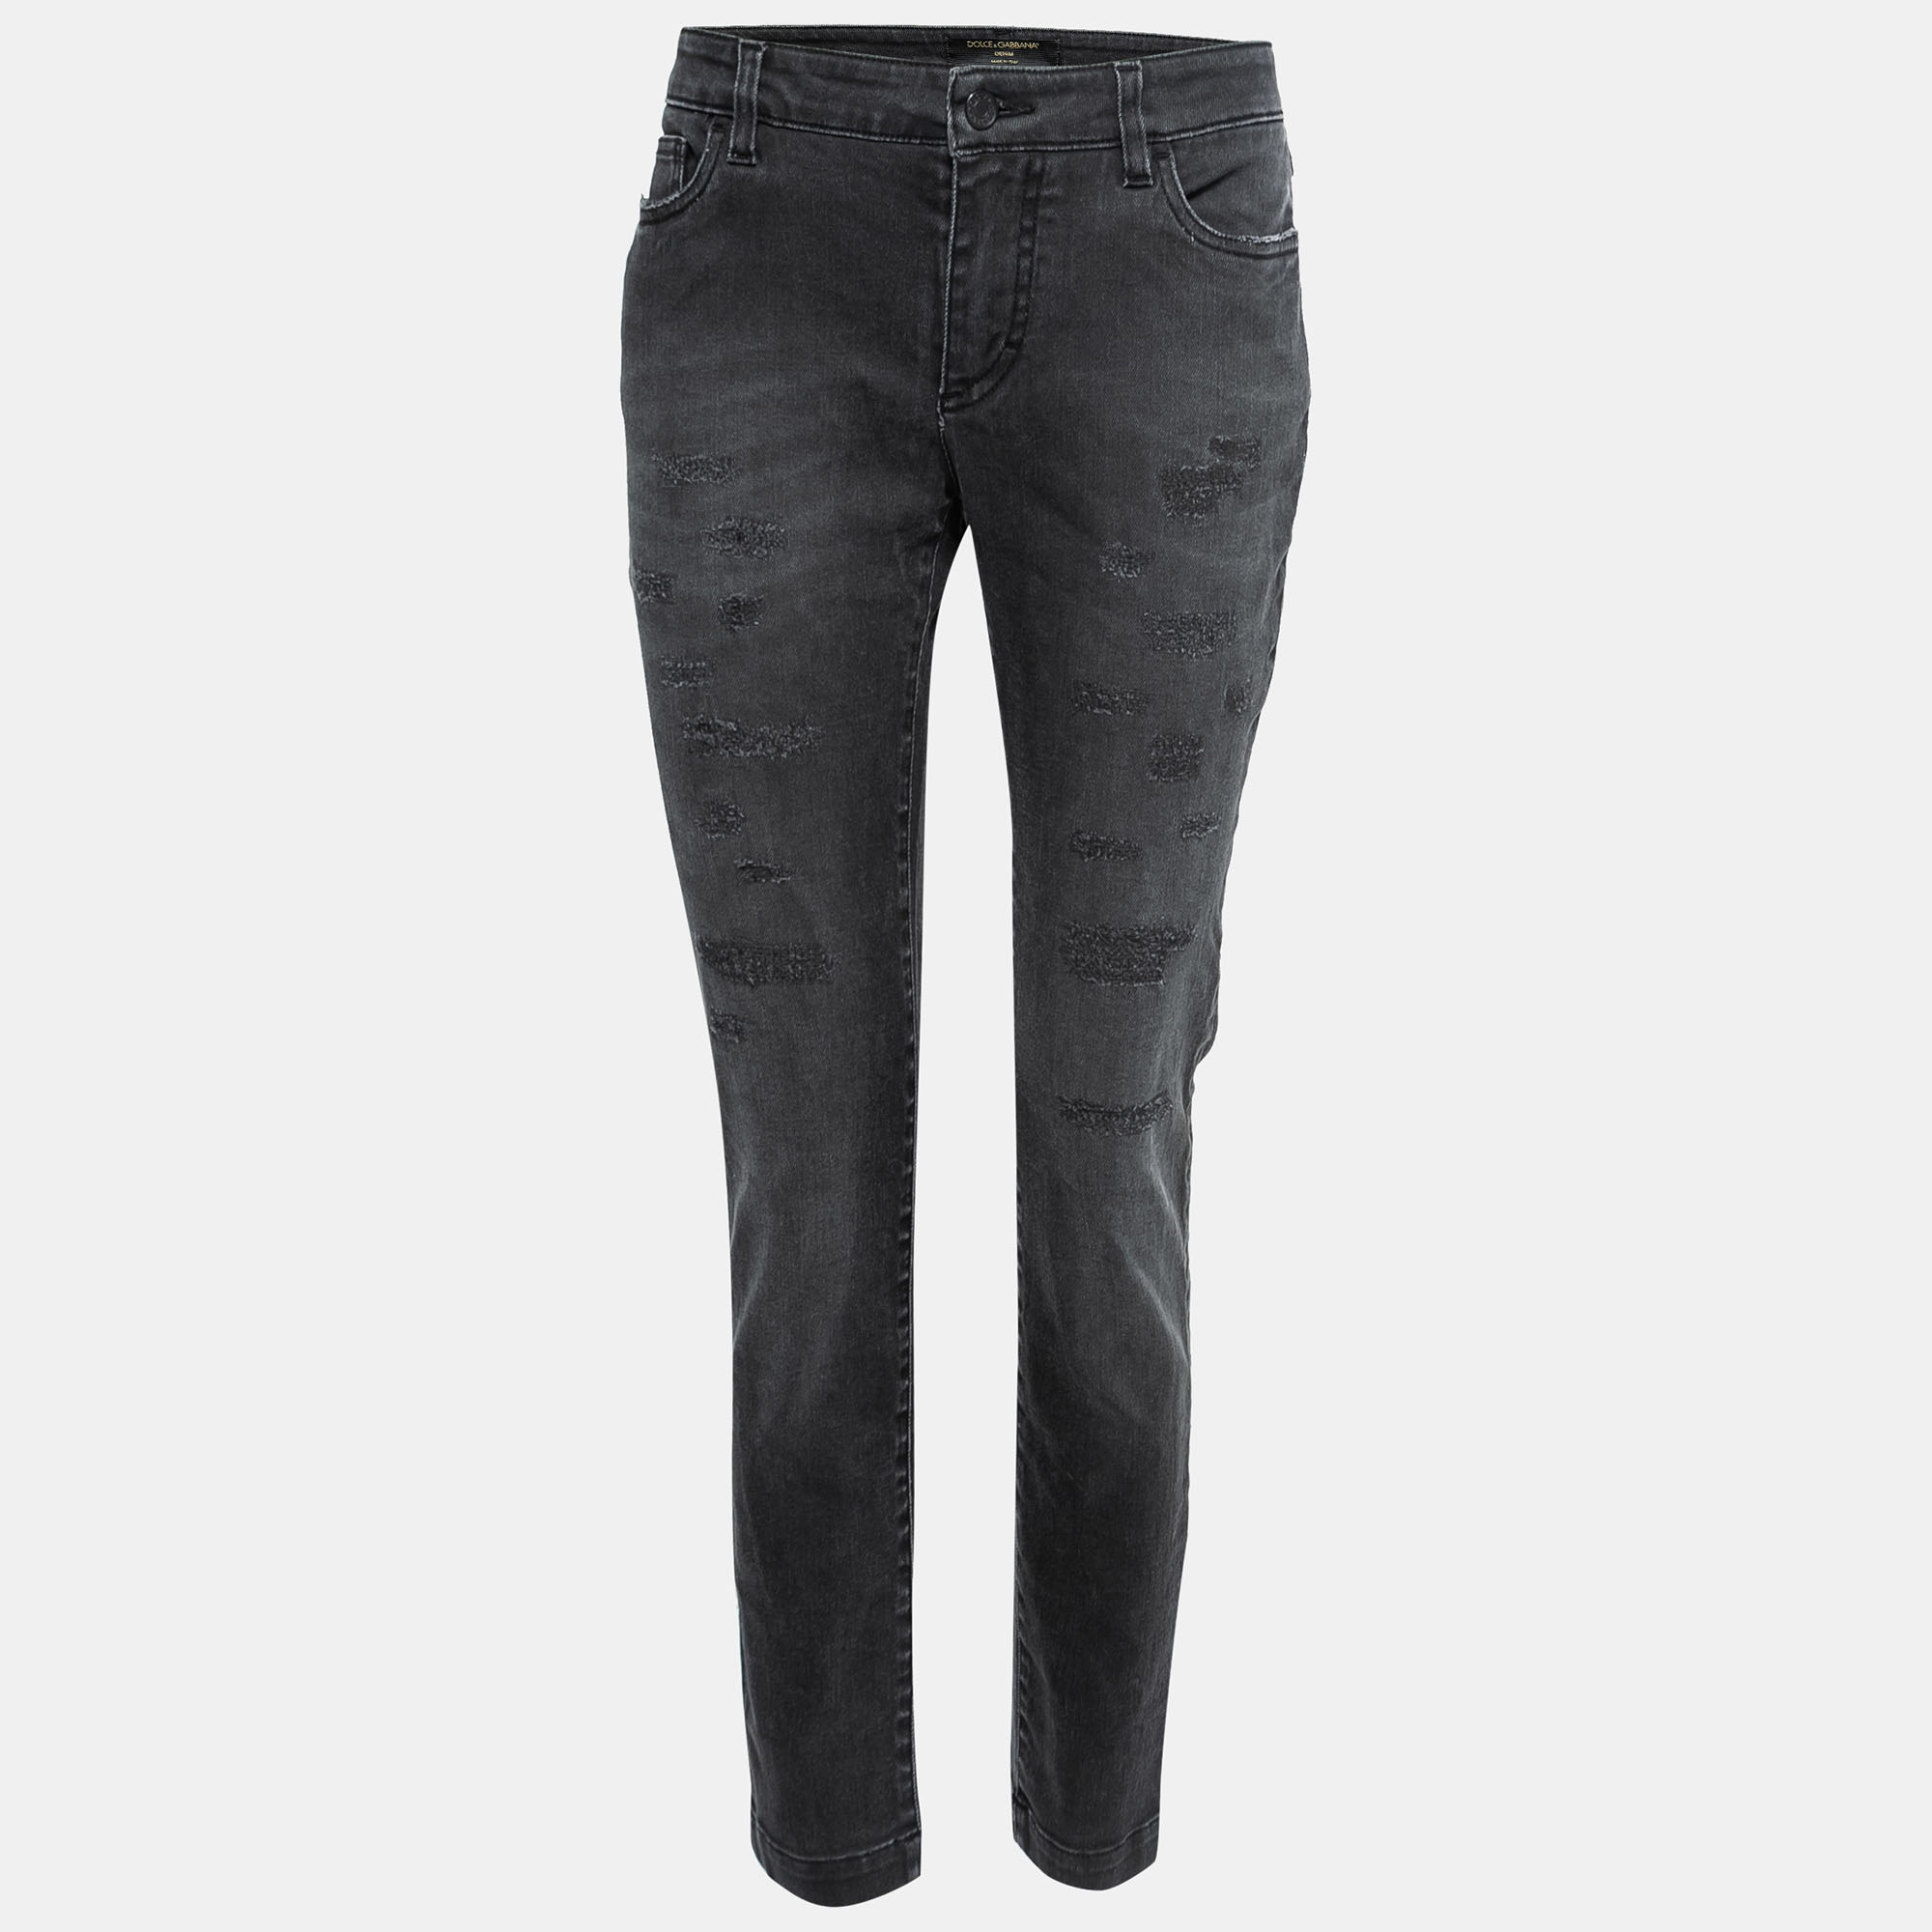 Pre-owned Dolce & Gabbana Dark Grey Faded Stretch Denim Jeans L Waist 32"